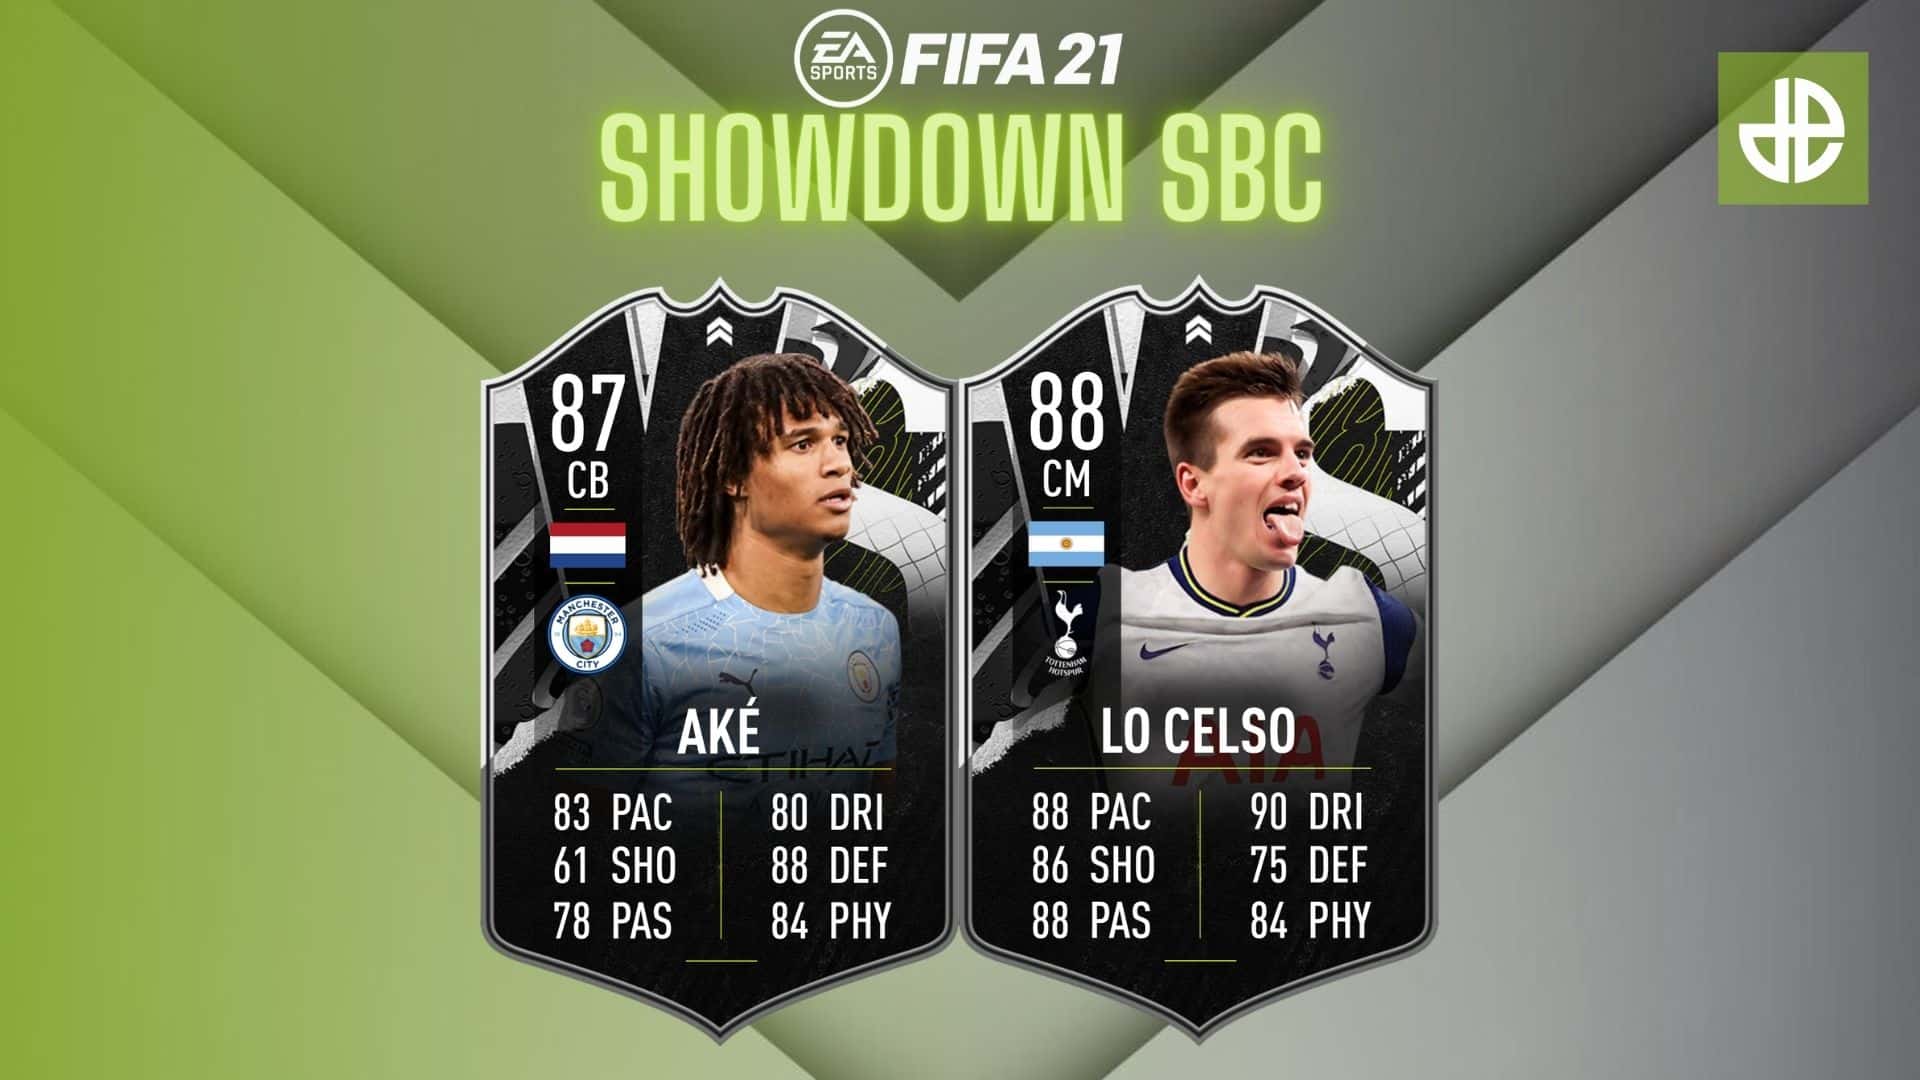 Ake & Lo Celso FIFA 21 Showdown SBC guide